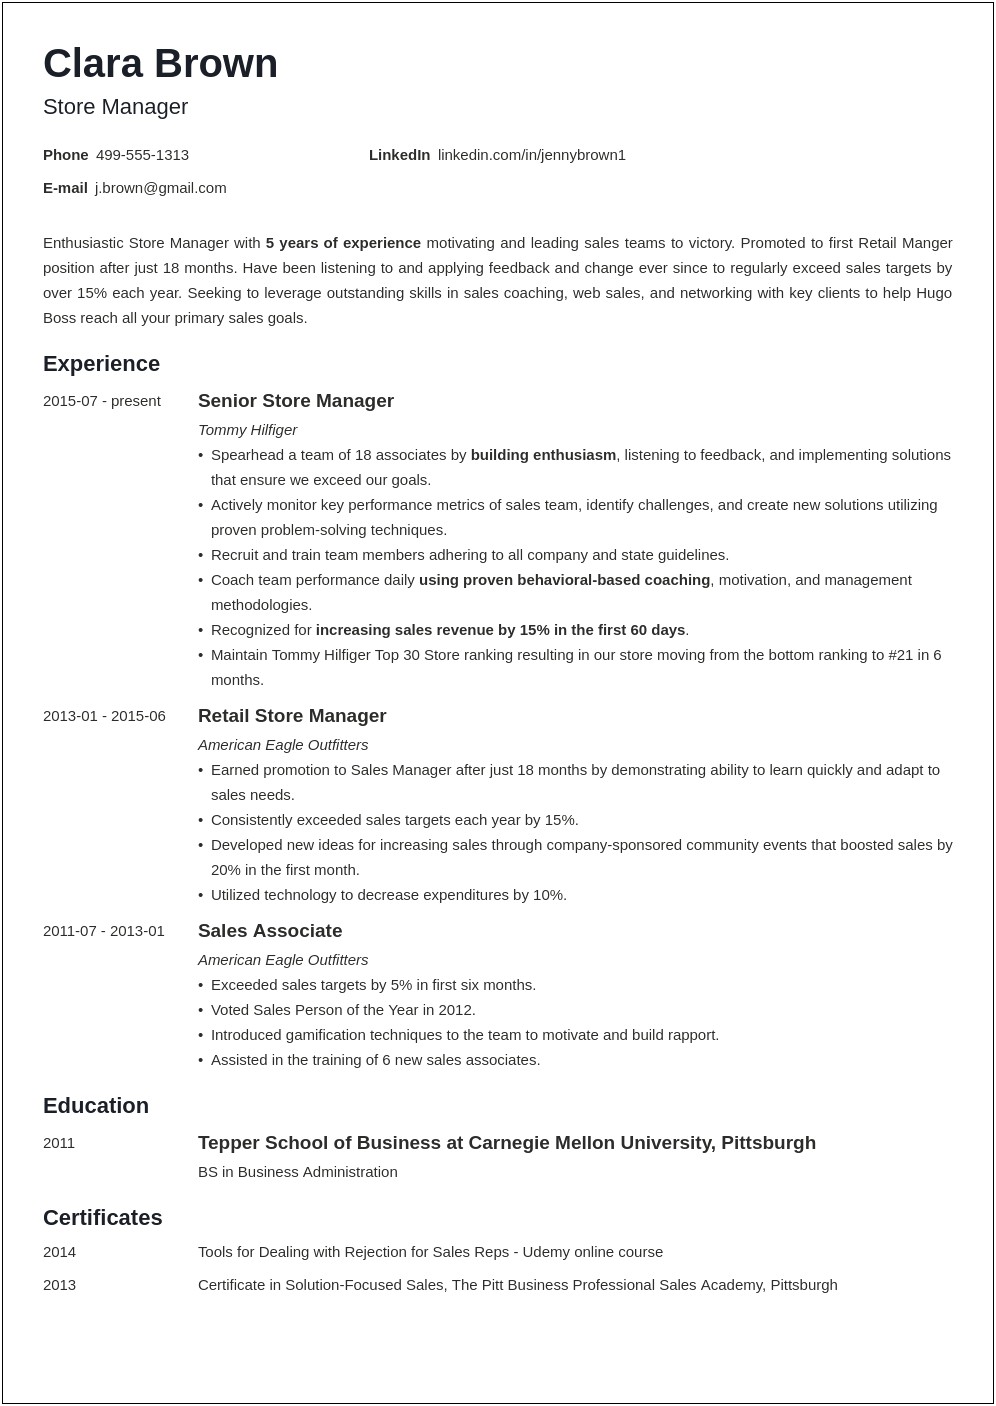 Floor Manager Description On Resume